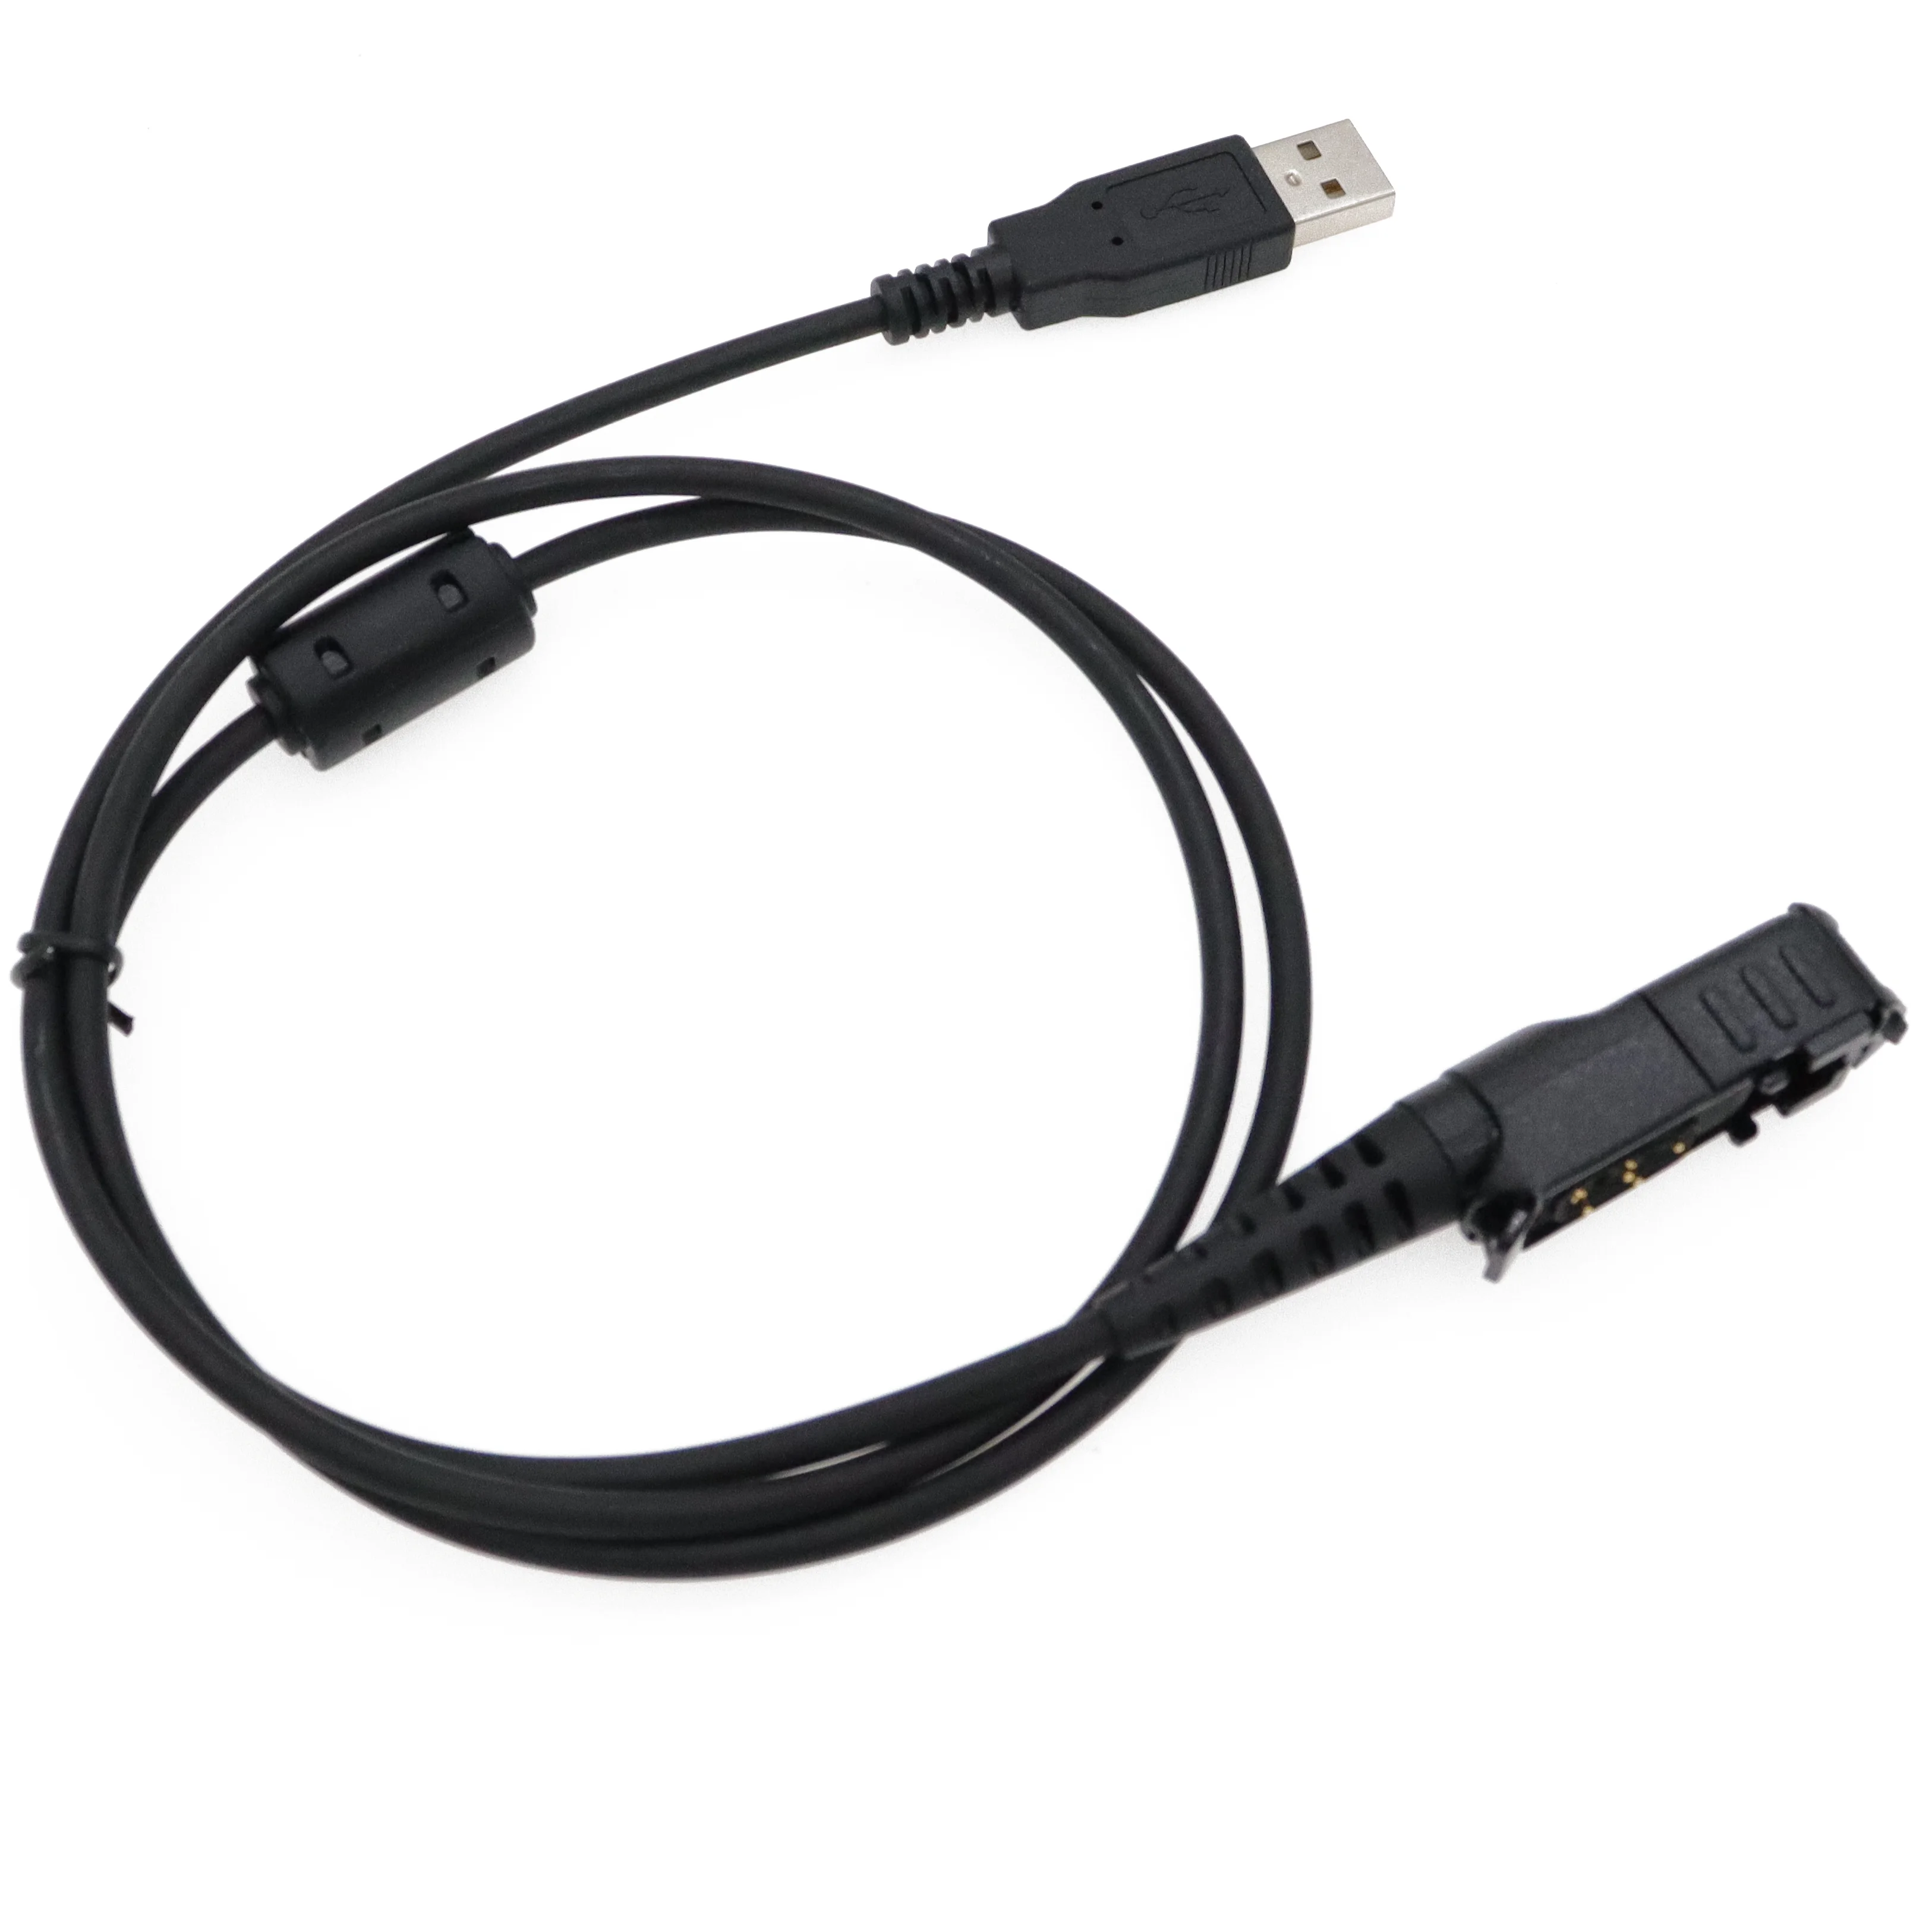 

USB Programming Cable For Motorola MotoTRBO DP2000E DEP500 DEP570 DP3441 DGP8050E XIR P6600 P6620 P6600i E8608i Walkie Talkie